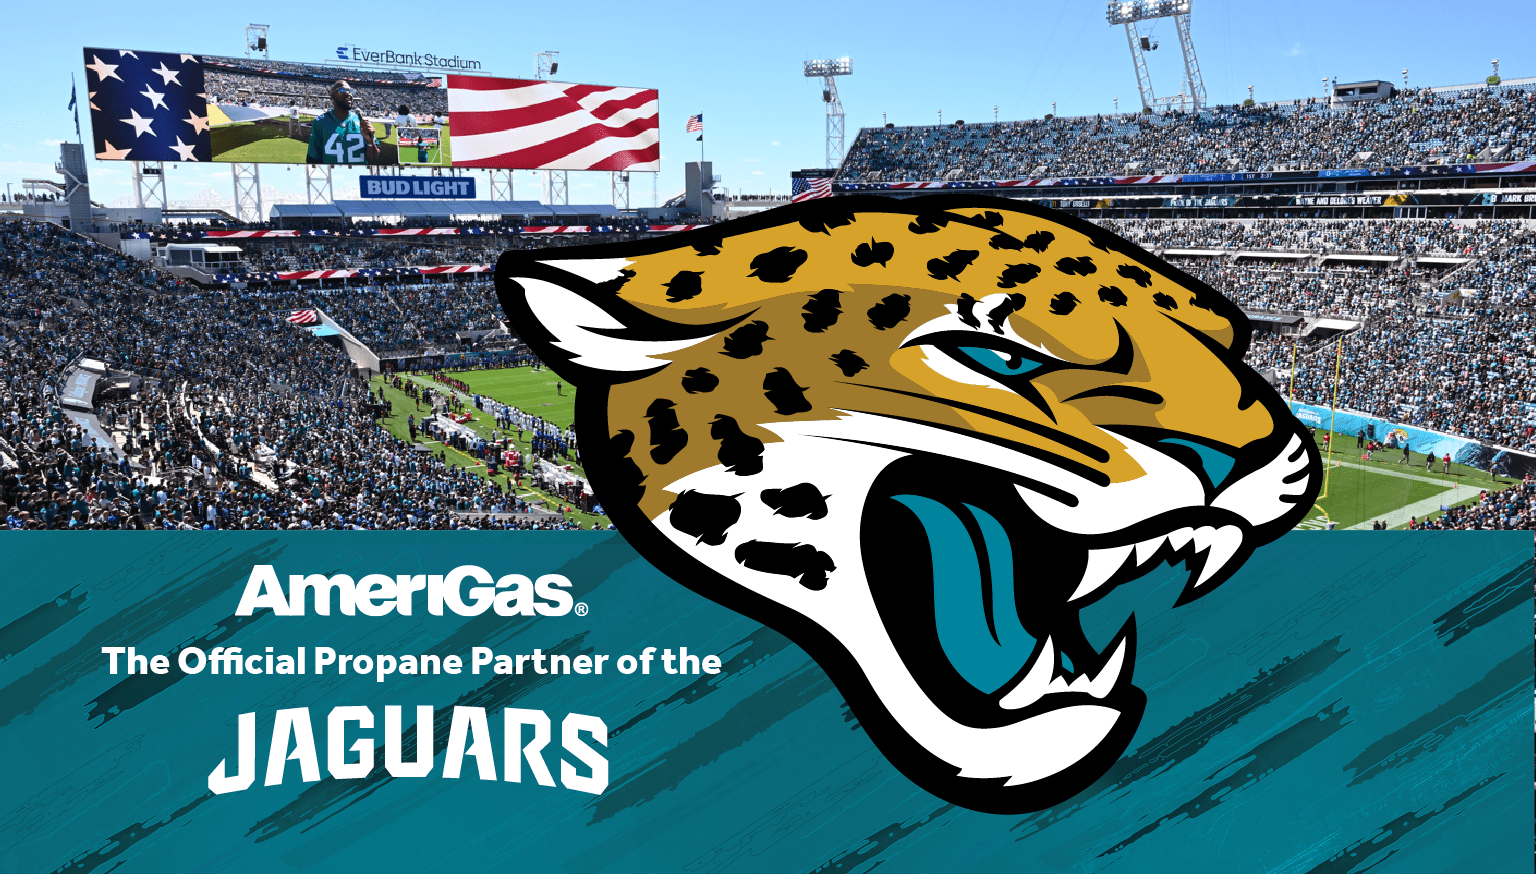 AmeriGas, the Official Propane Partner of the Jacksonville Jaguars